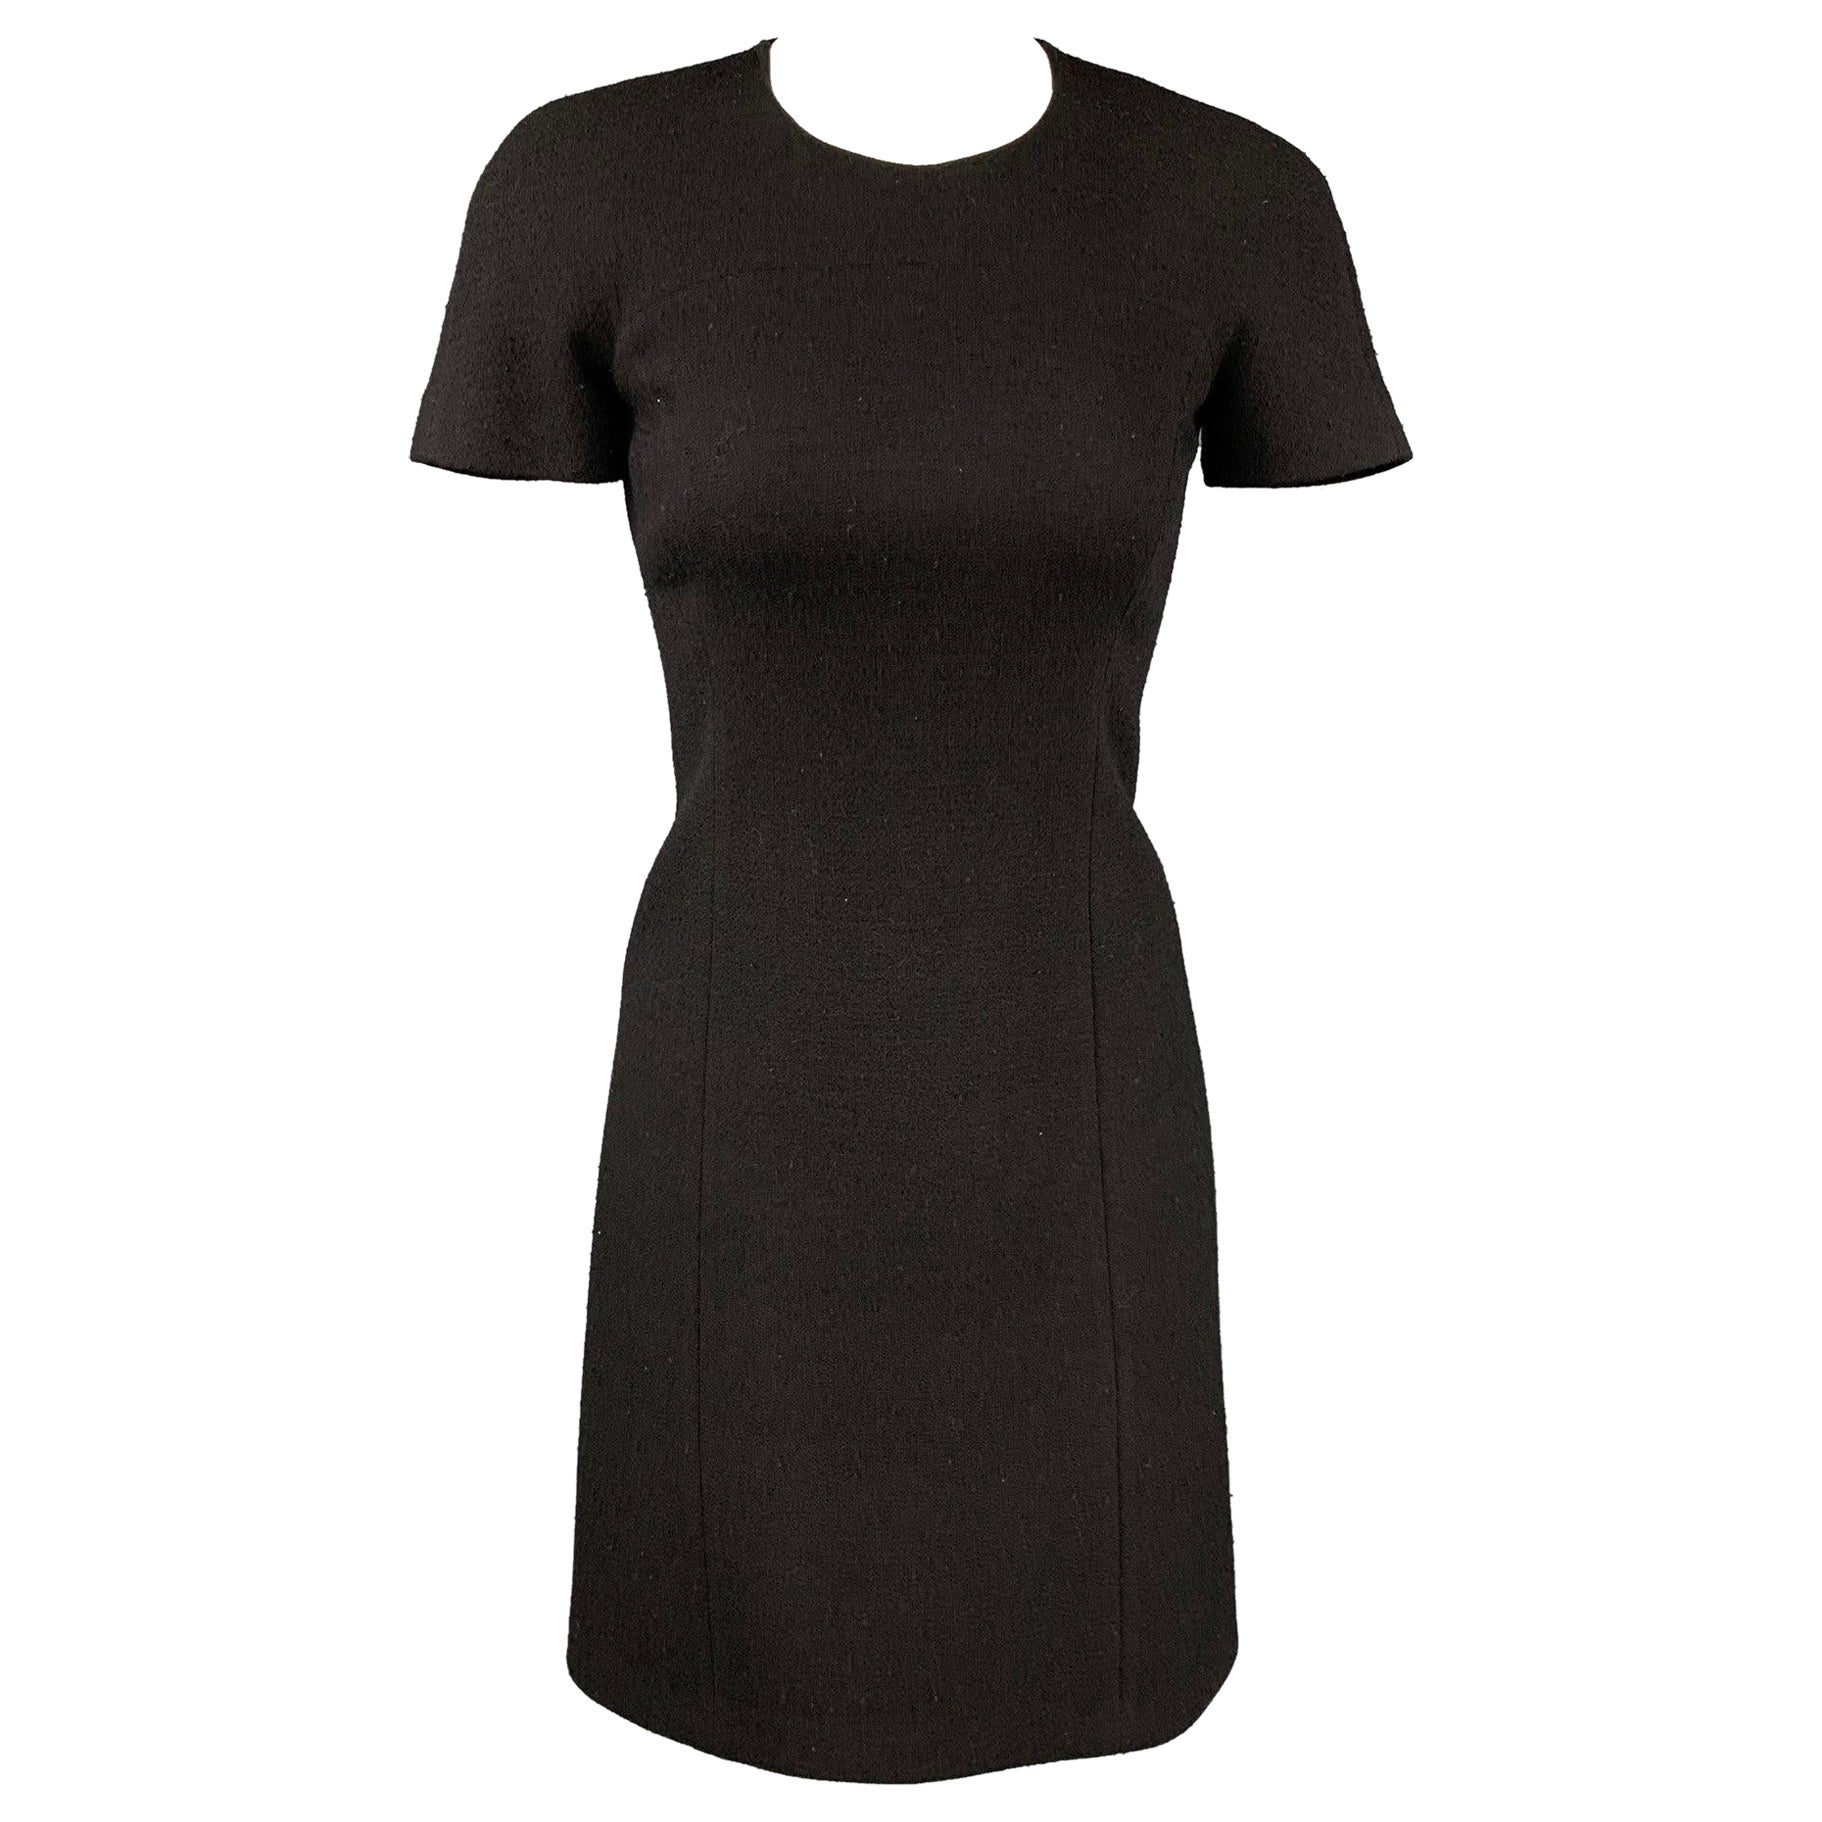 MICHAEL KORS Size 0 Black Crepe Shift Dress For Sale